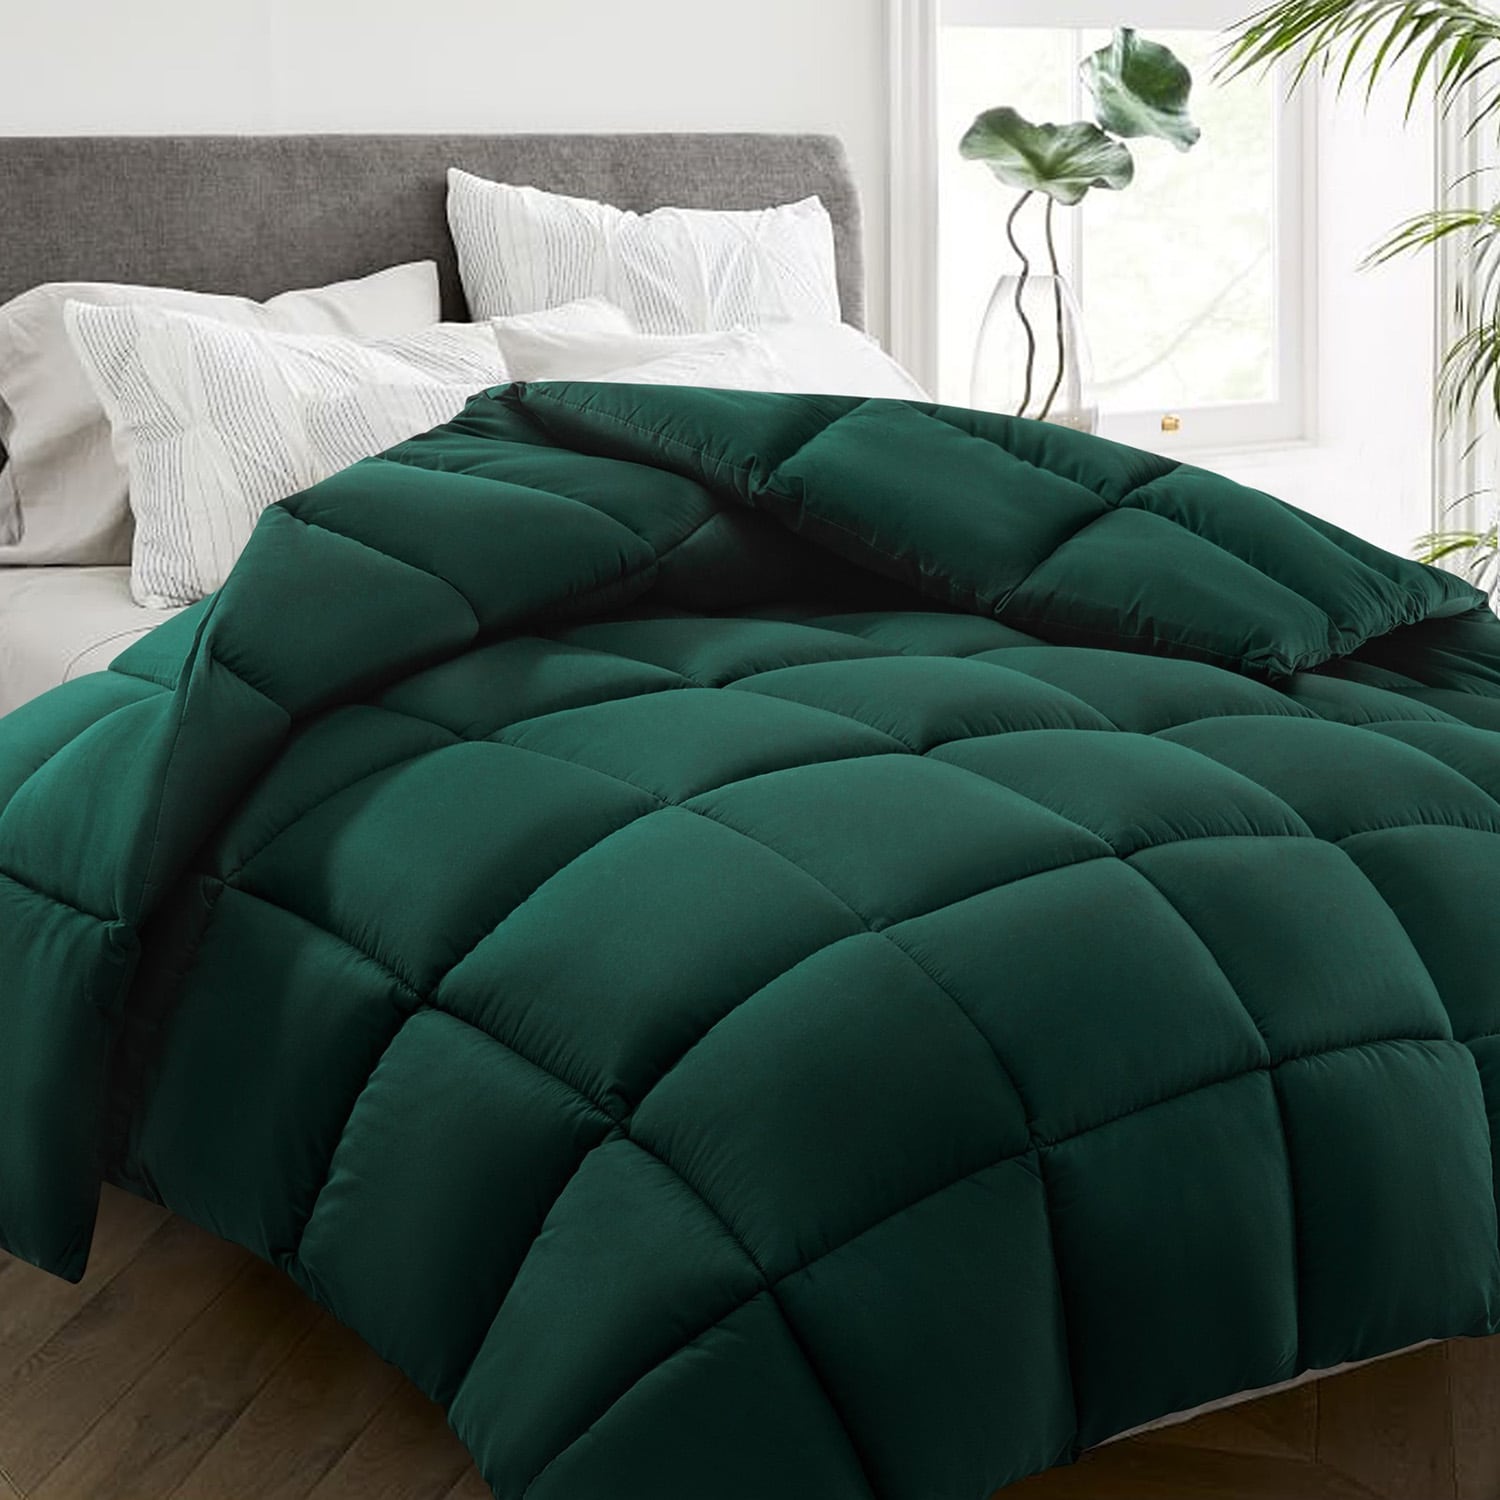 JEAREY Down Alternative Comforter Green Solid Reversible Twin